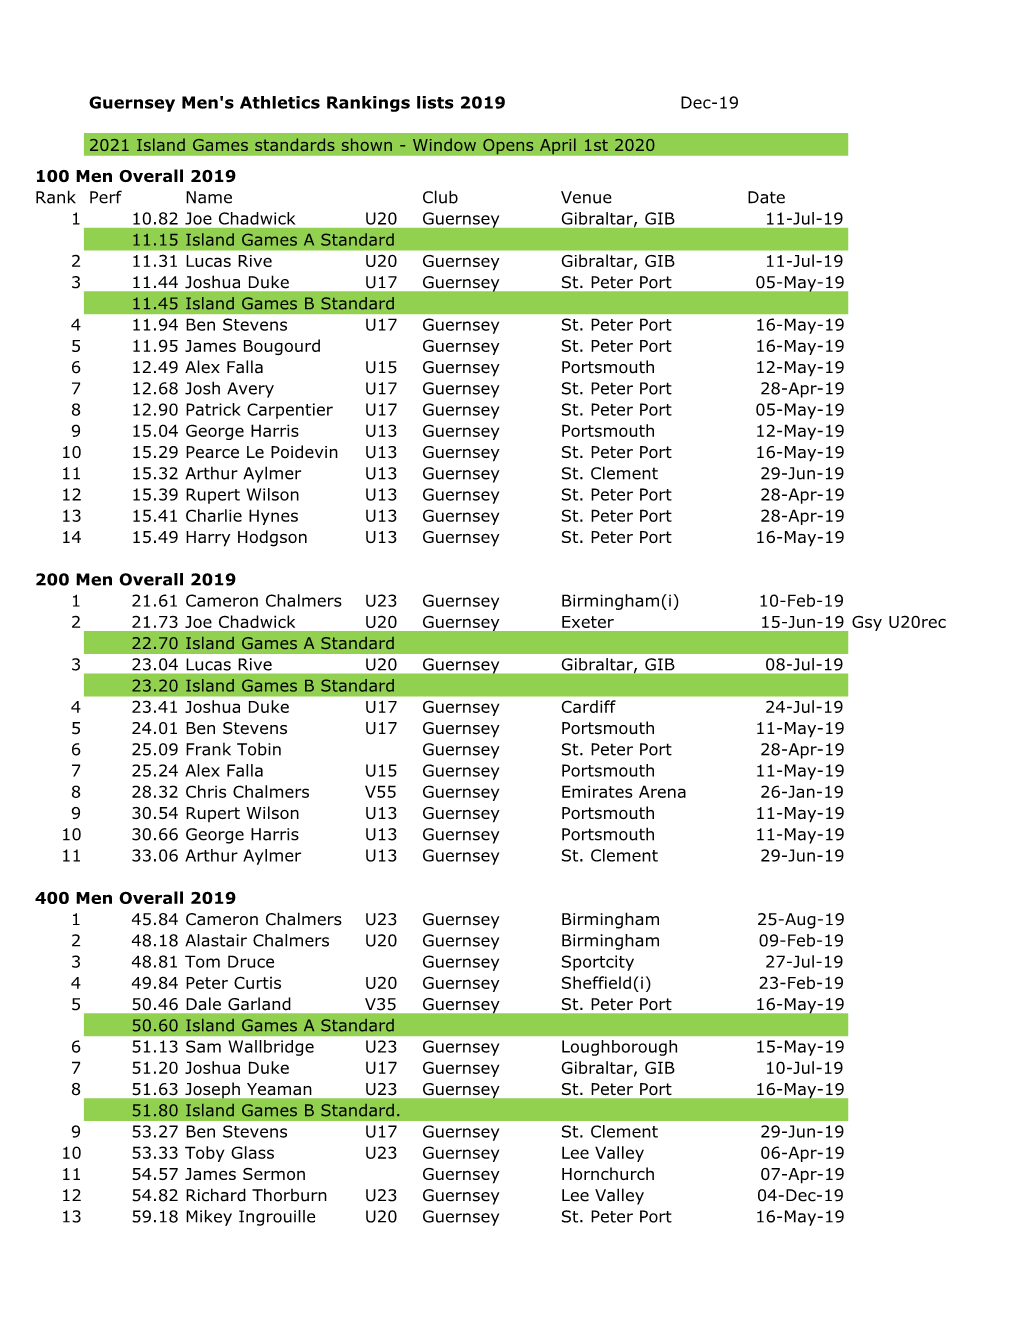 Guernsey Men's Athletics Rankings Lists 2019 Dec-19 2021 Island Games Standards Shown